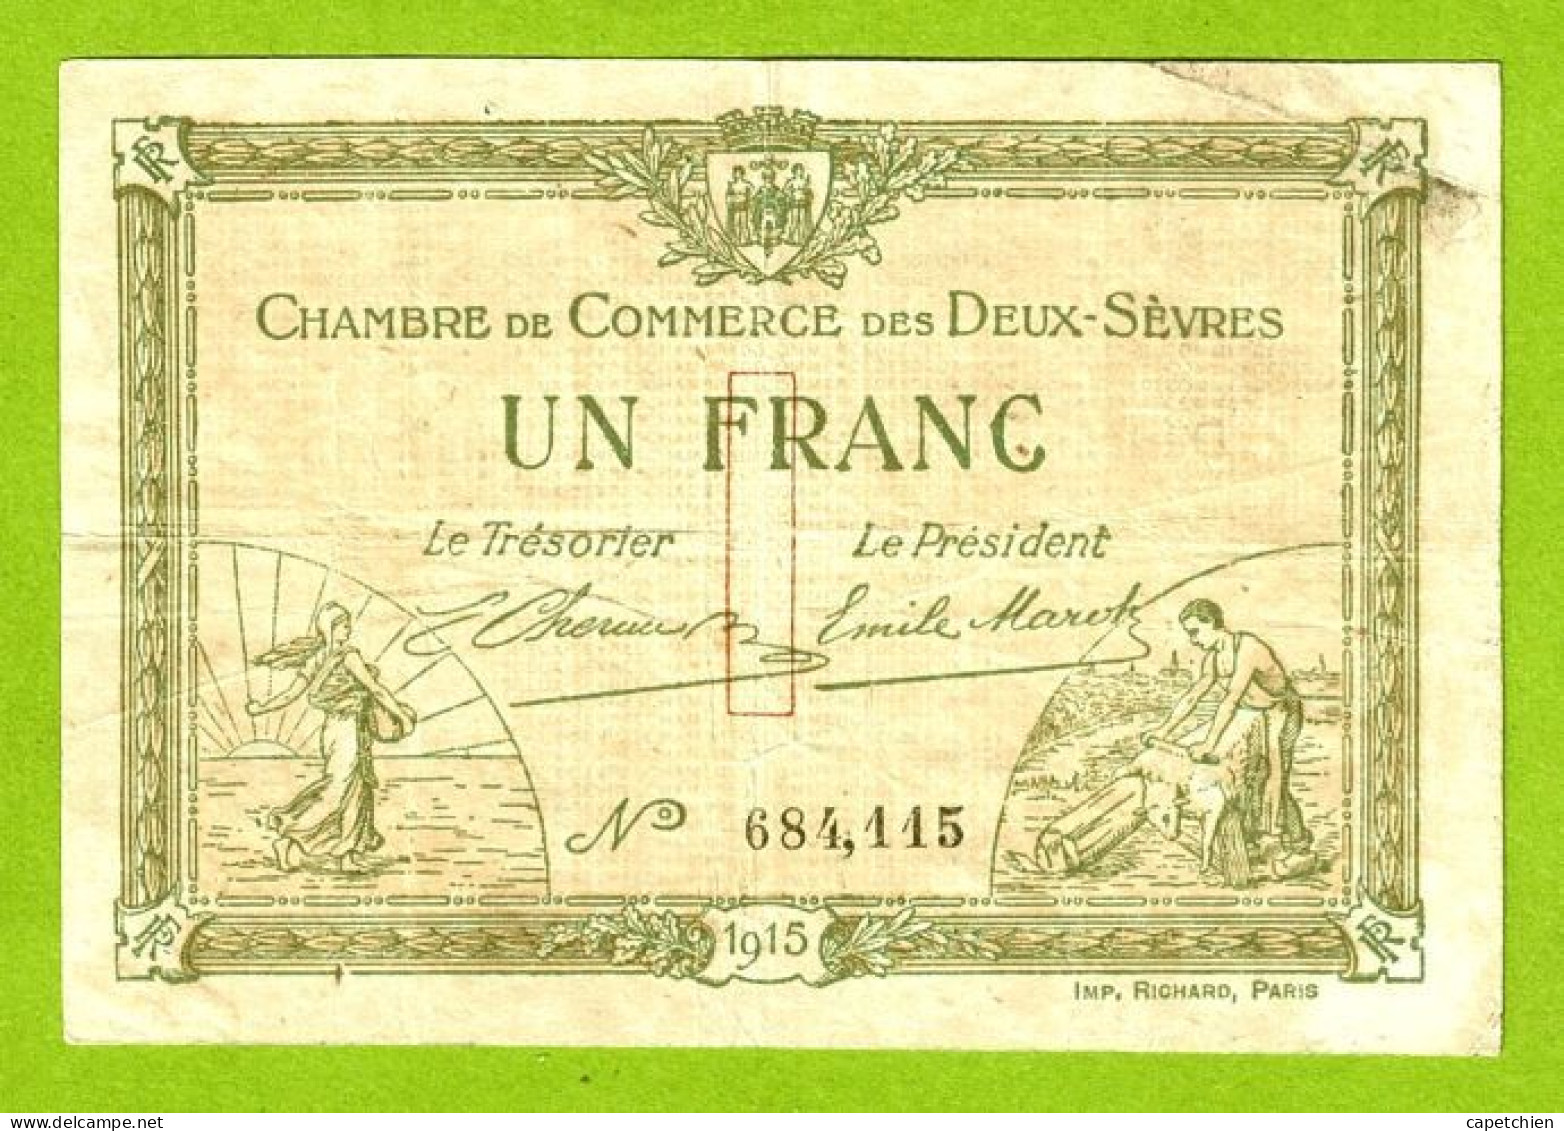 FRANCE/ CHAMBRE DE COMMERCE Des DEUX SÈVRES / 1 FRANC / 30 SEPTEMBRE 1915 / 684,115 - Handelskammer